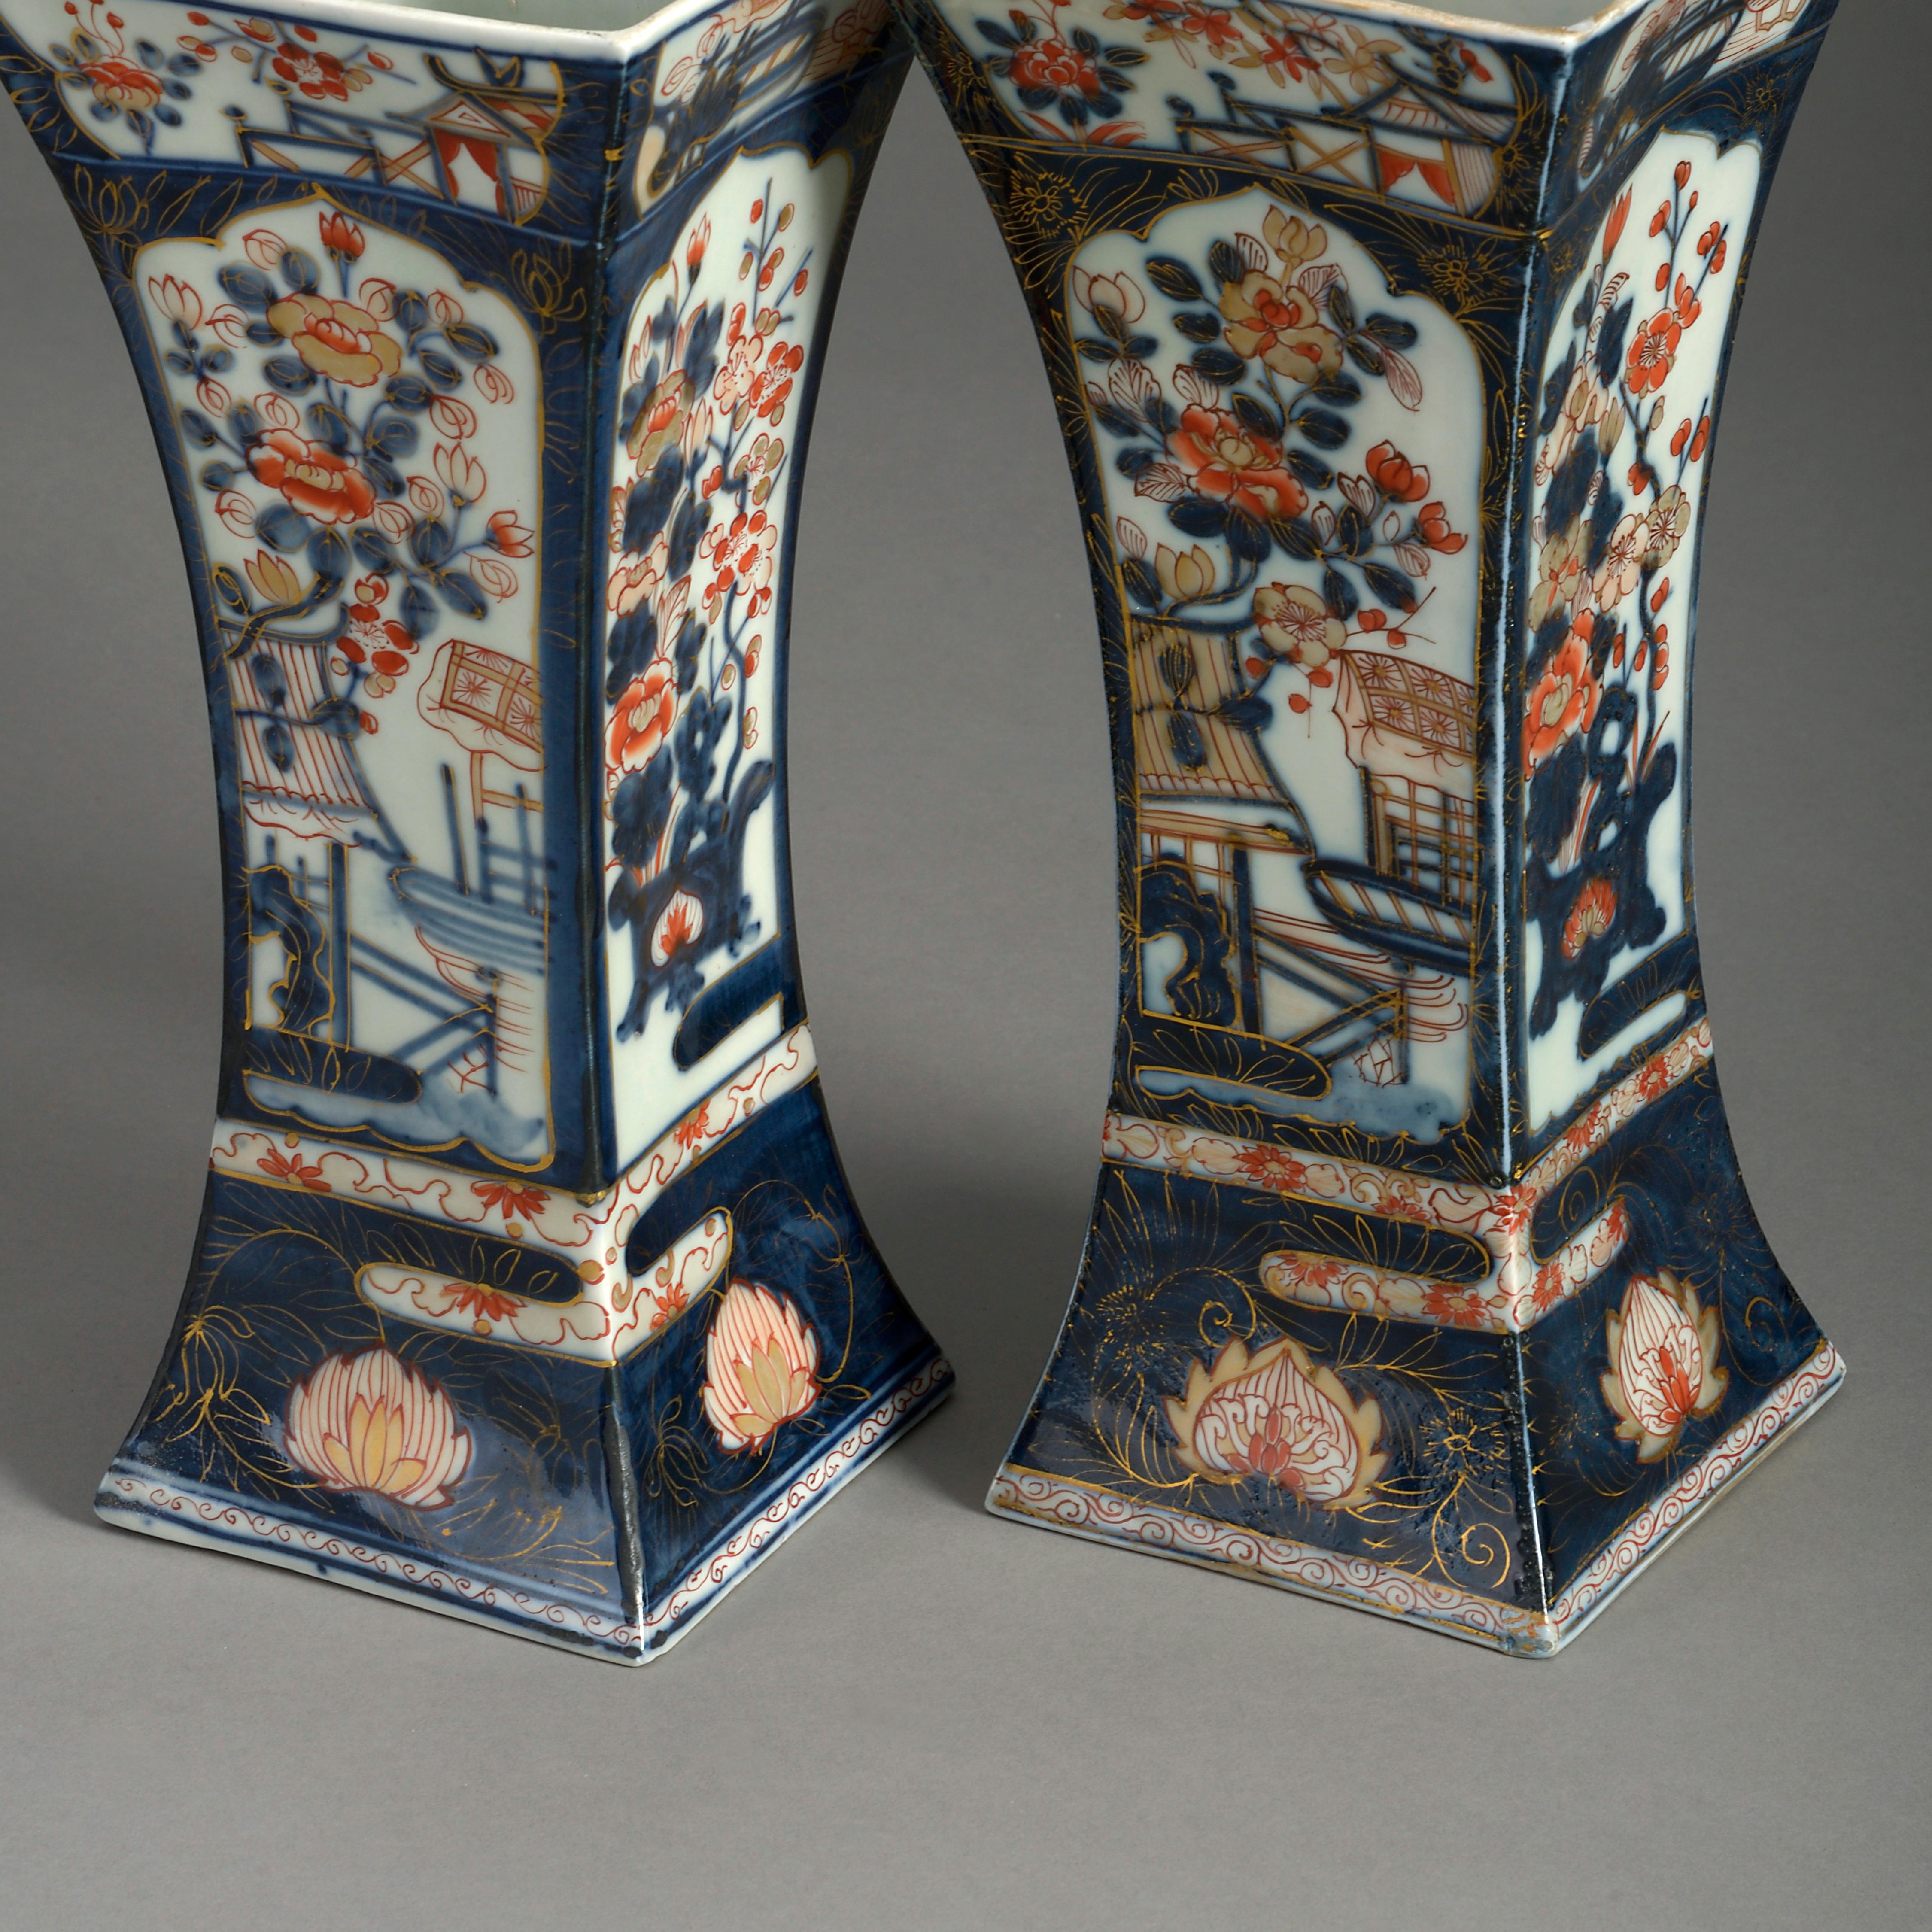 Fired Three 19th Century Samson Imari Porcelain Vases